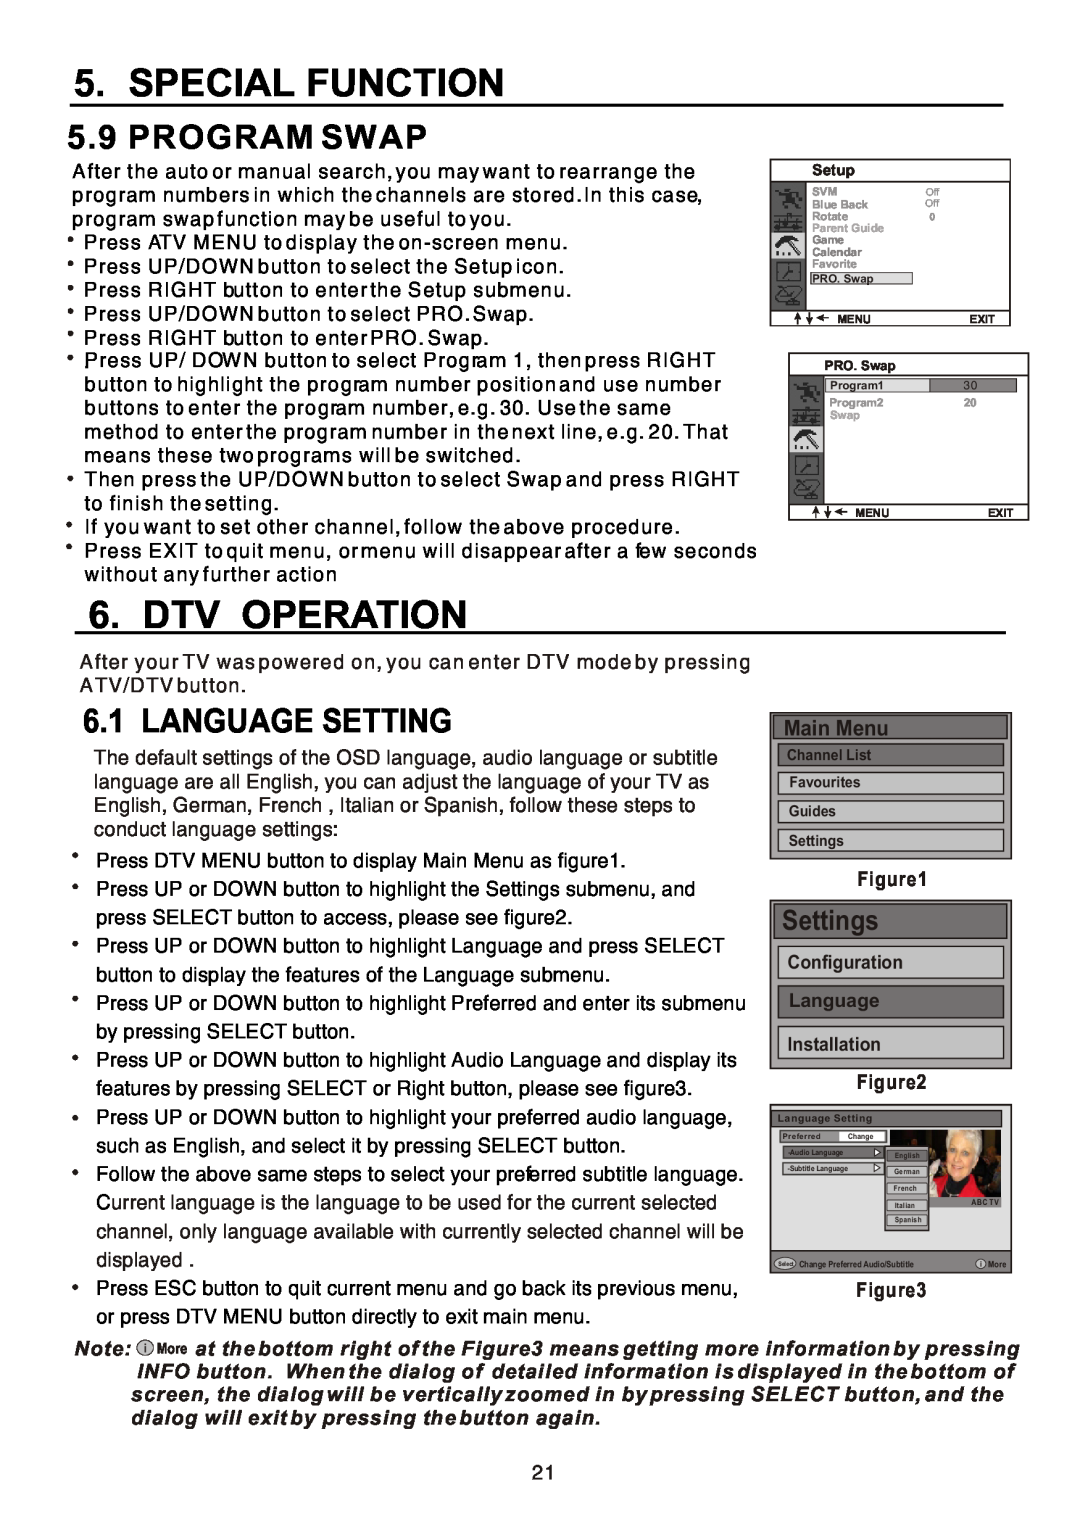 Teac CT-W32ID owner manual Dtv Operation, Program Swap, Language Setting, Settings, Main Menu, Special Function 